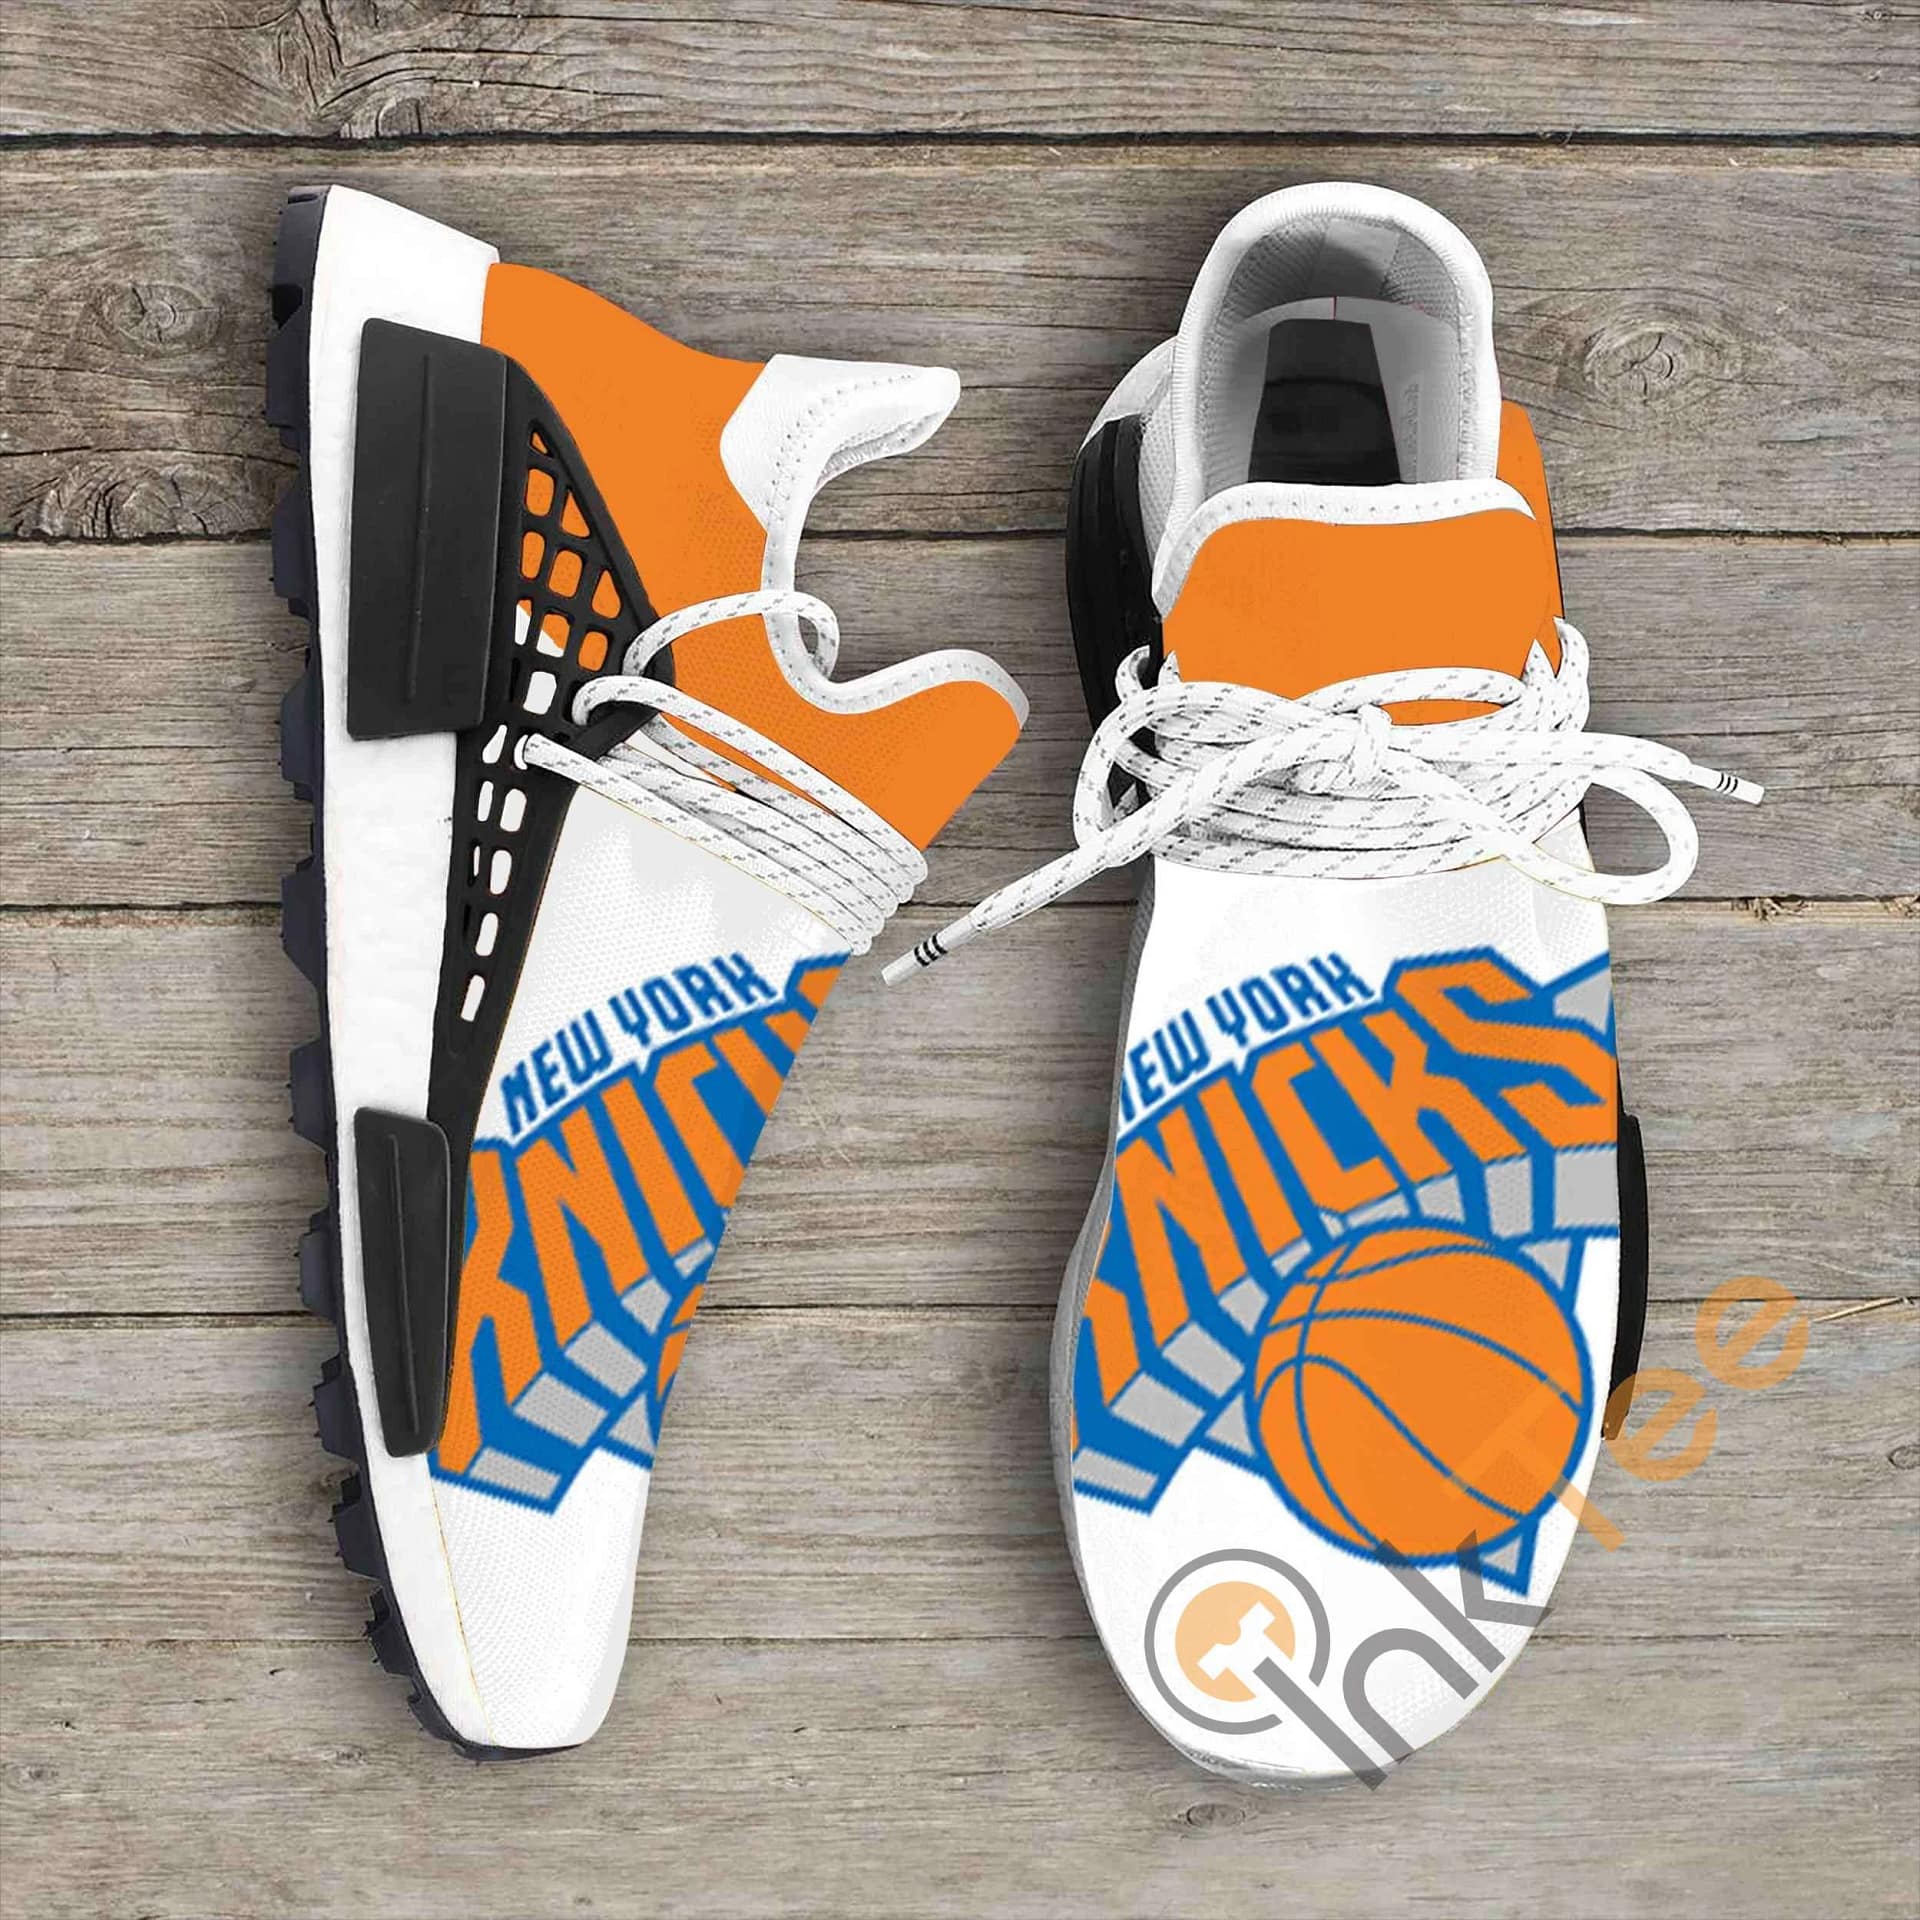 New York Knicks Nba Nmd Human Shoes